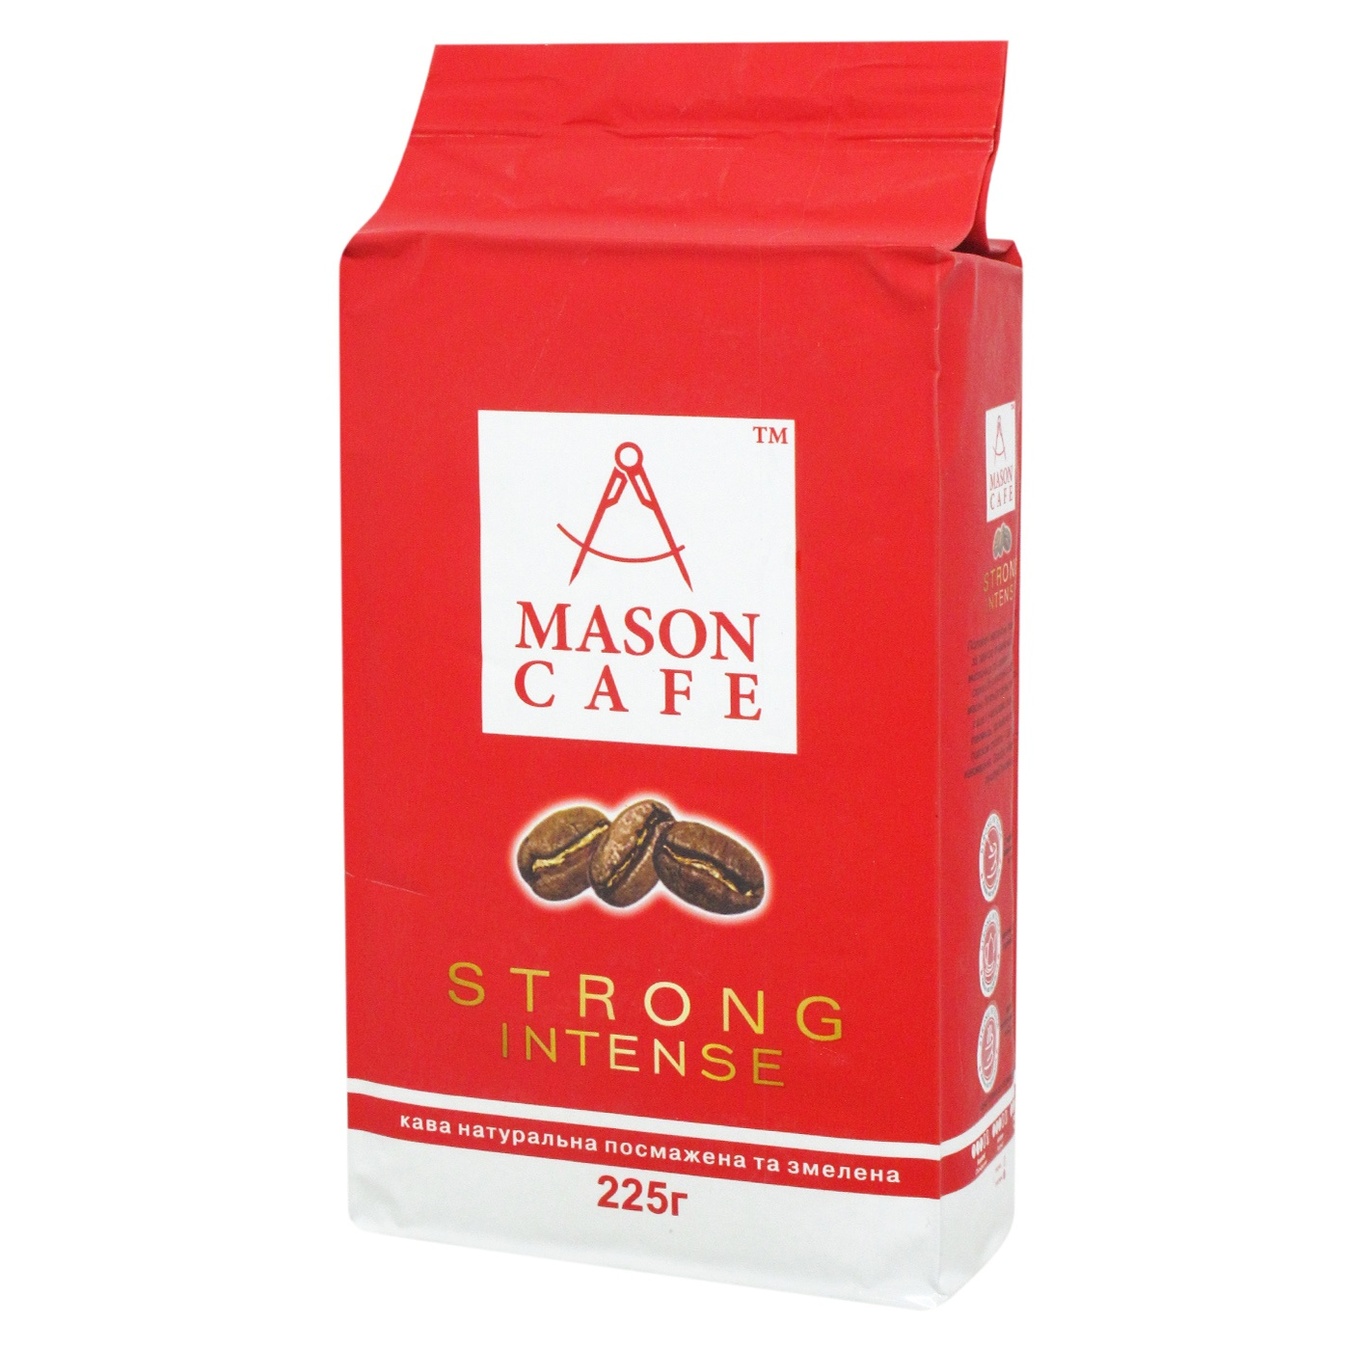 Ground coffee Strong Intense Mason cafe 225g bag